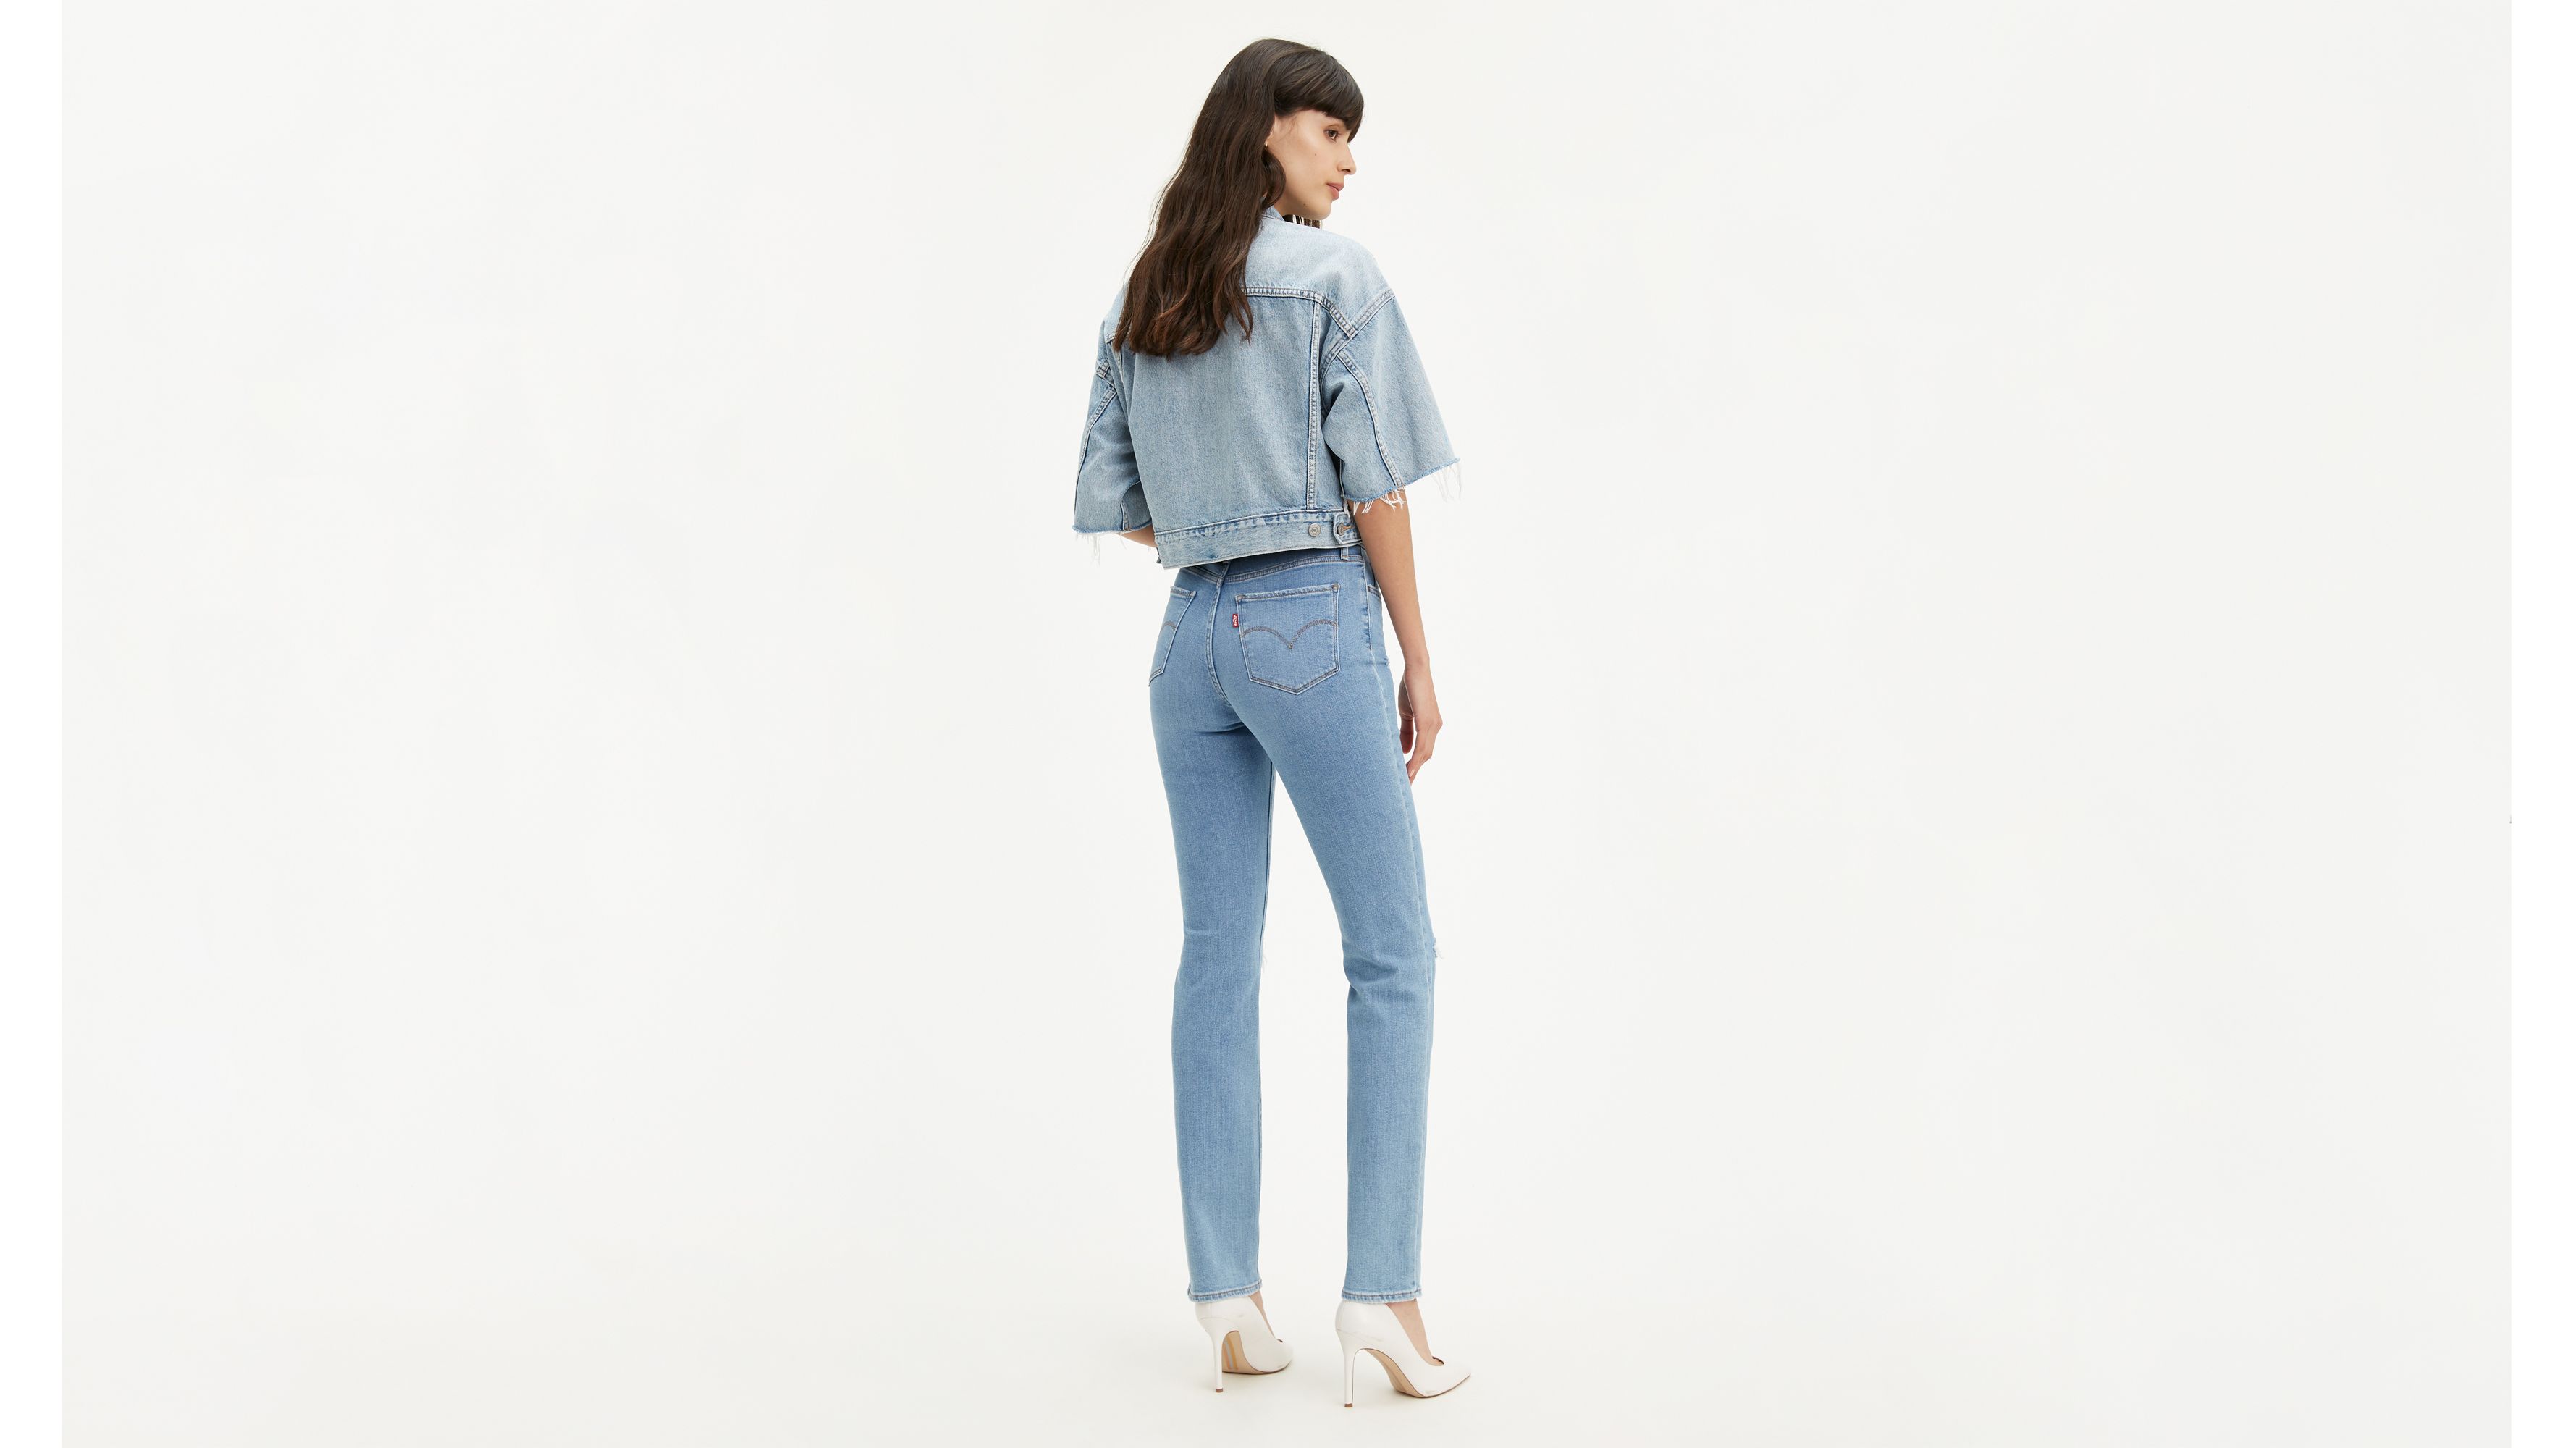 Levi's Womens 724 High Rise Slim Straight Jeans - 188830238